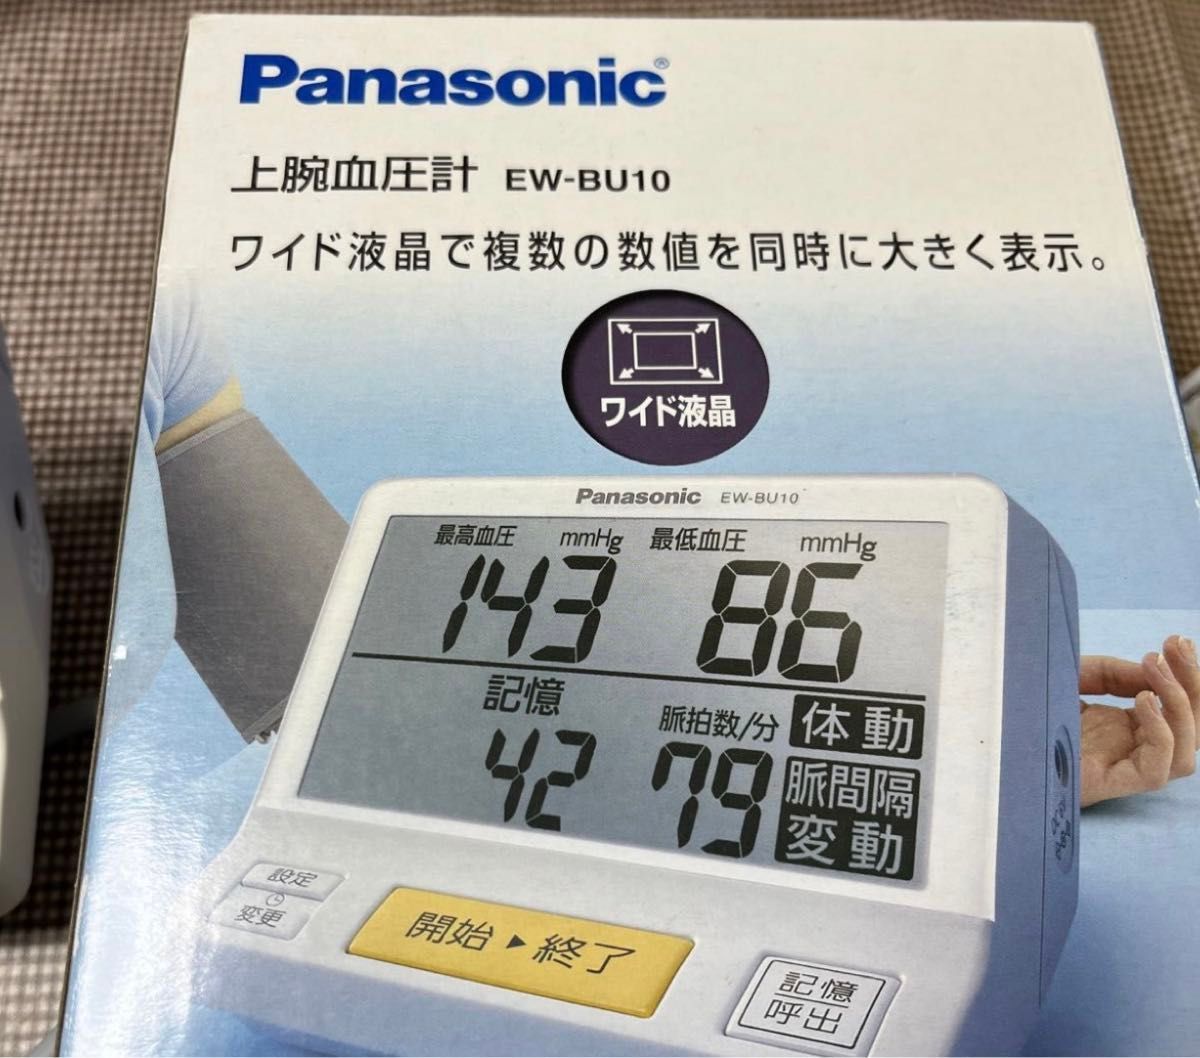 Panasonic EW-BU10-W 血圧計の裏側電池の蓋のみの出品です。　　上腕式 パナソニックの血圧計の電池の蓋